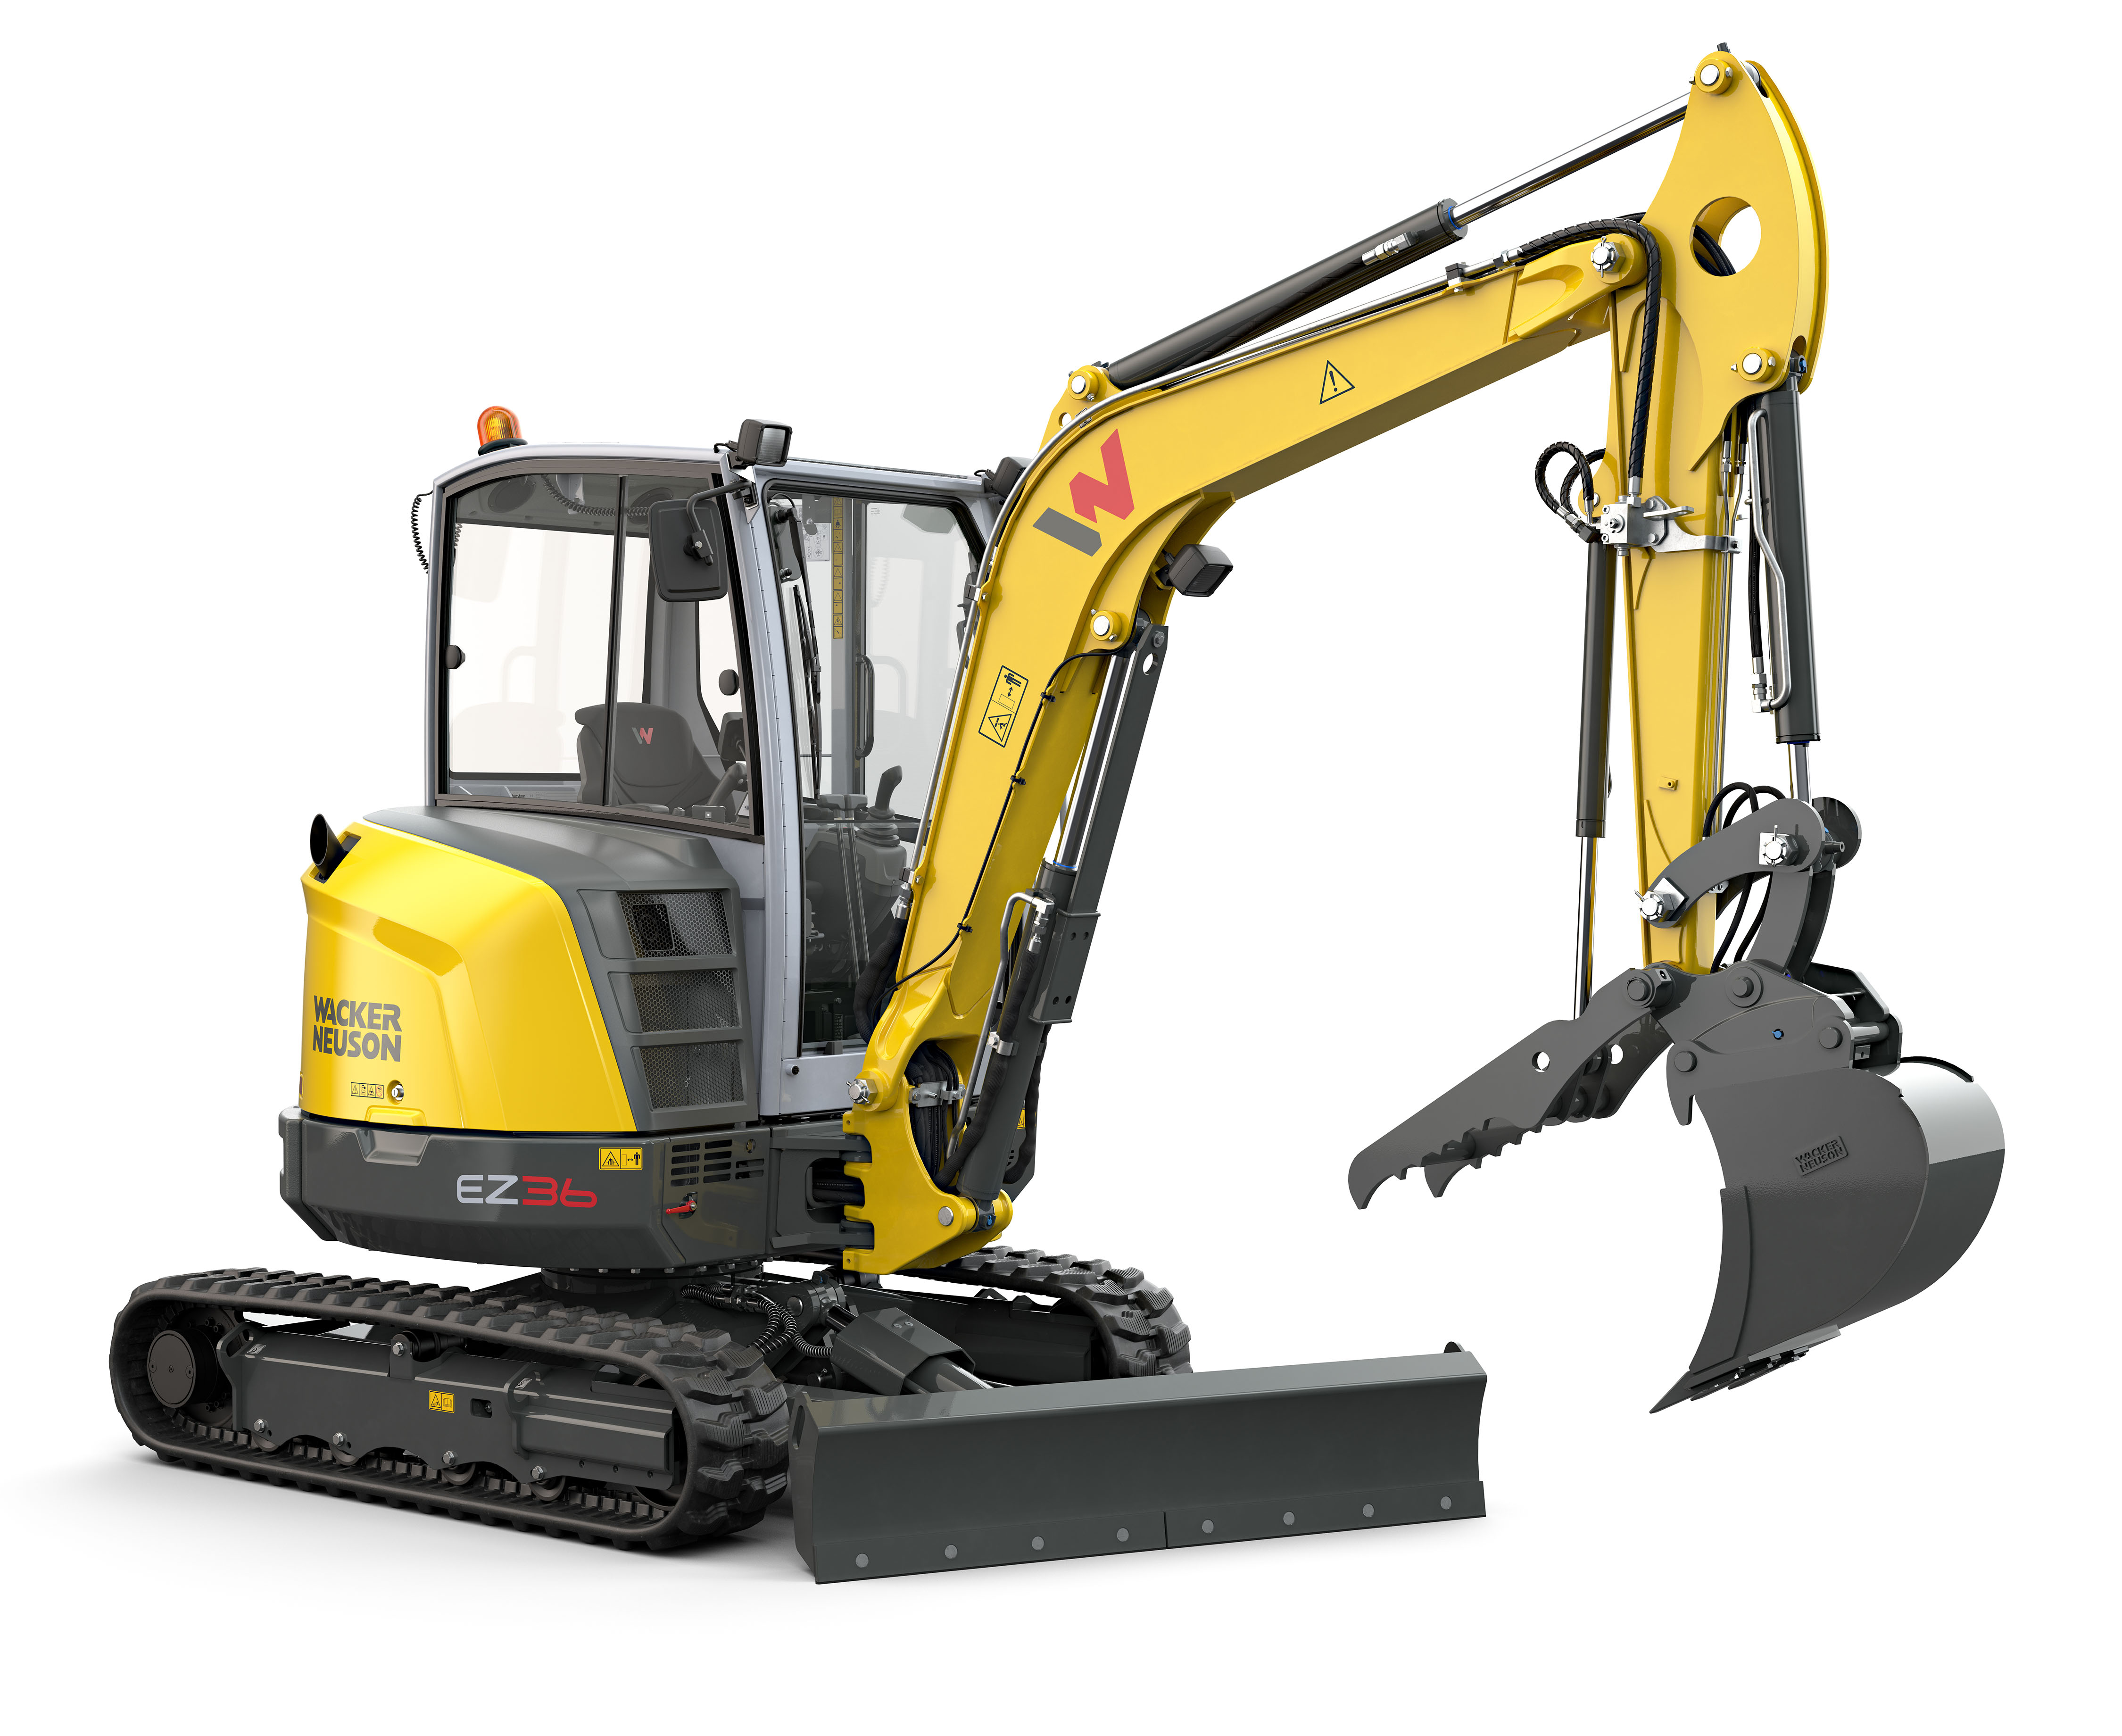 Wacker Neuson EZ36, EZ26 Excavators | Construction Equipment